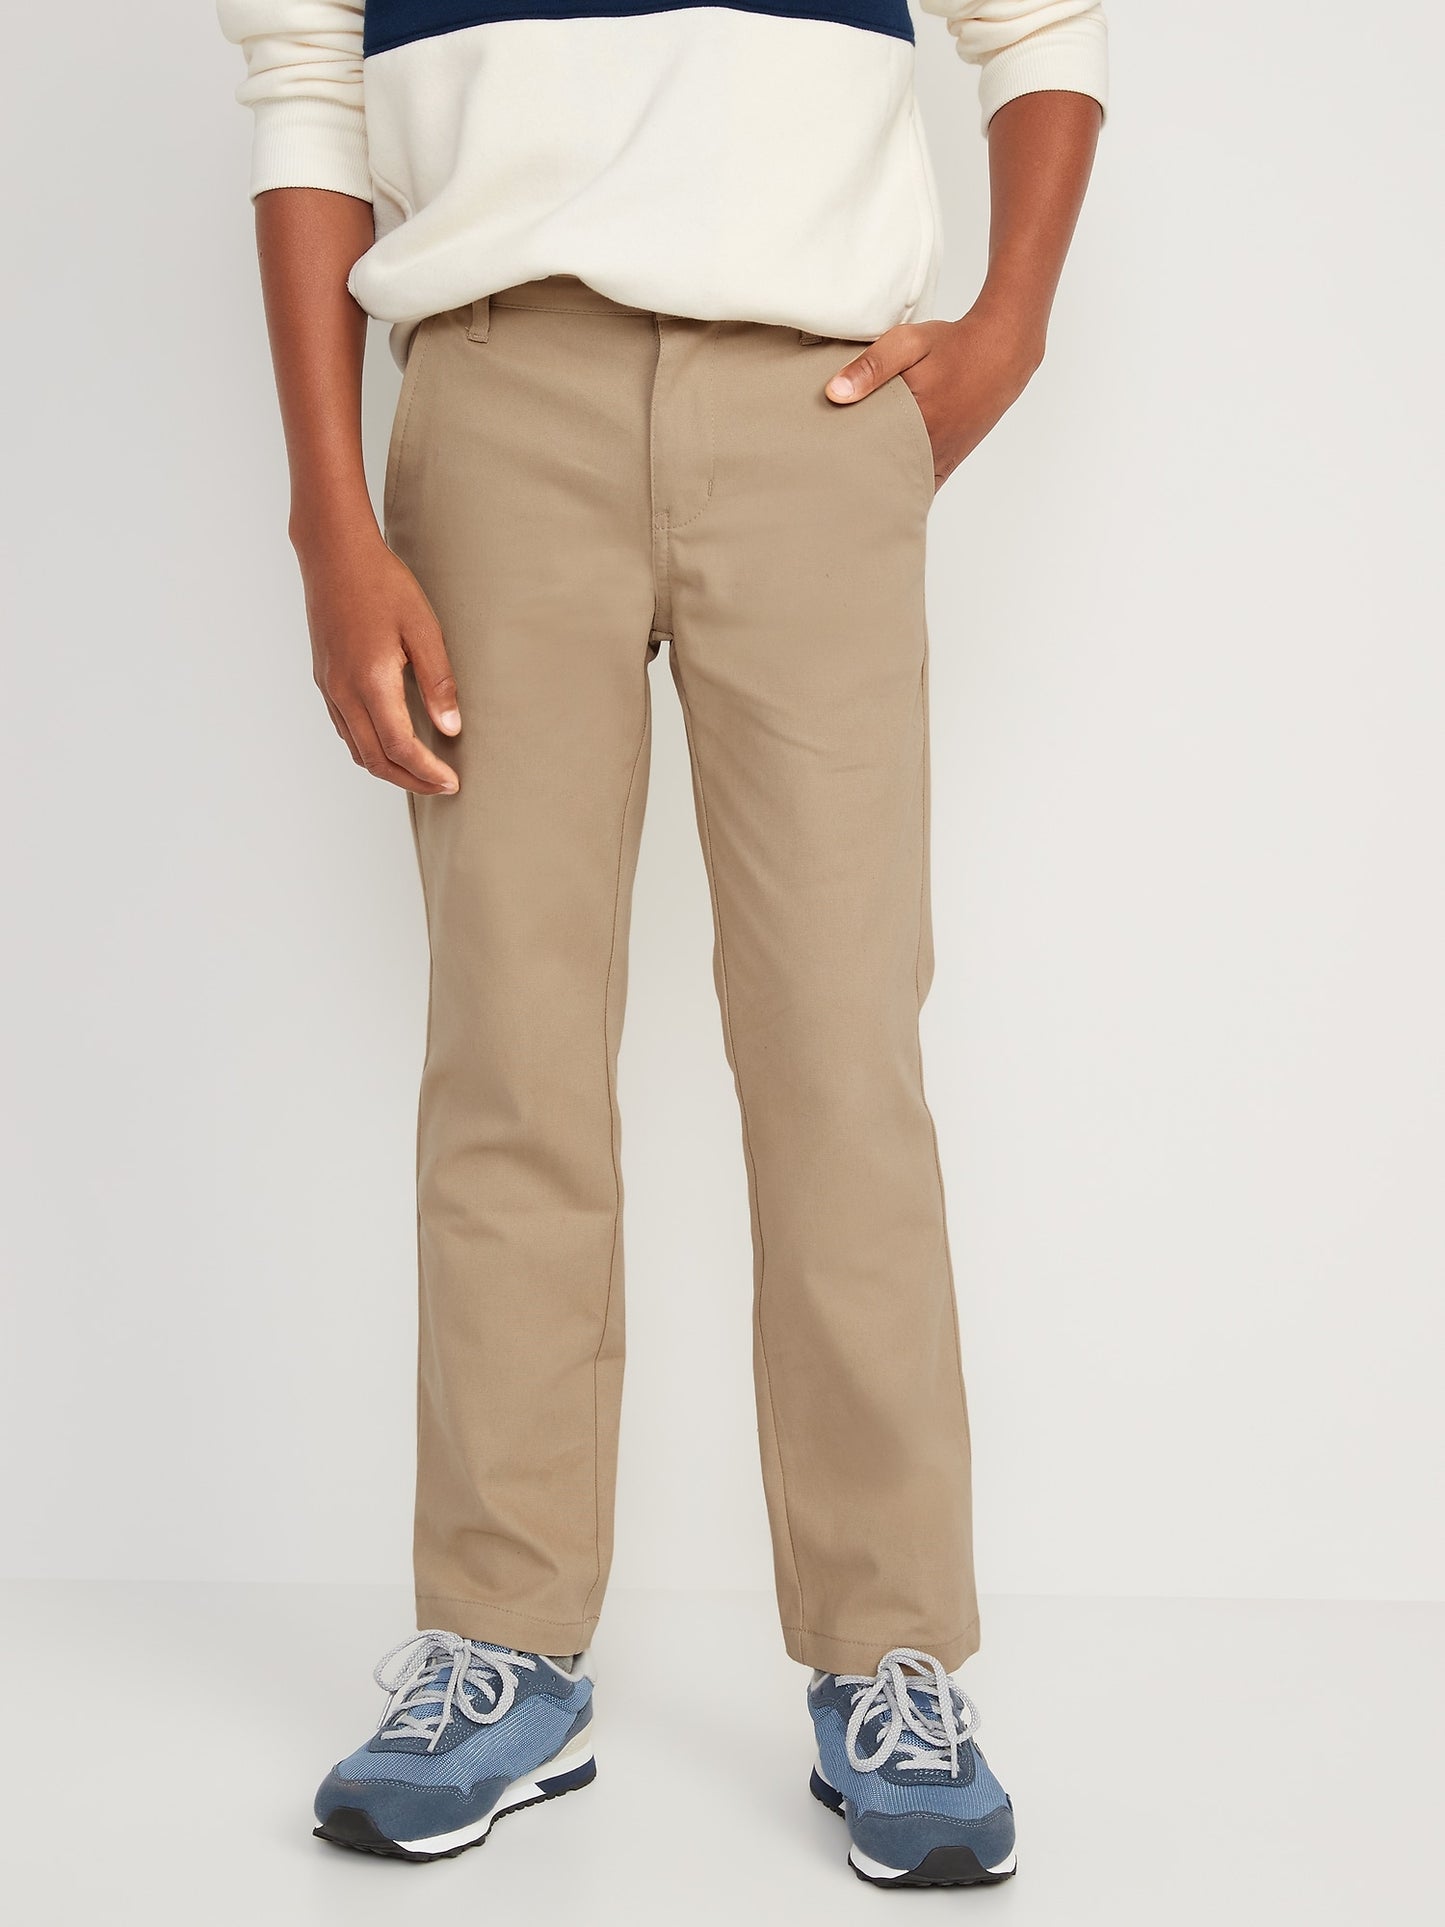 Straight Built-In Flex Uniform Pants for Boys Straight Chino Shore Enough